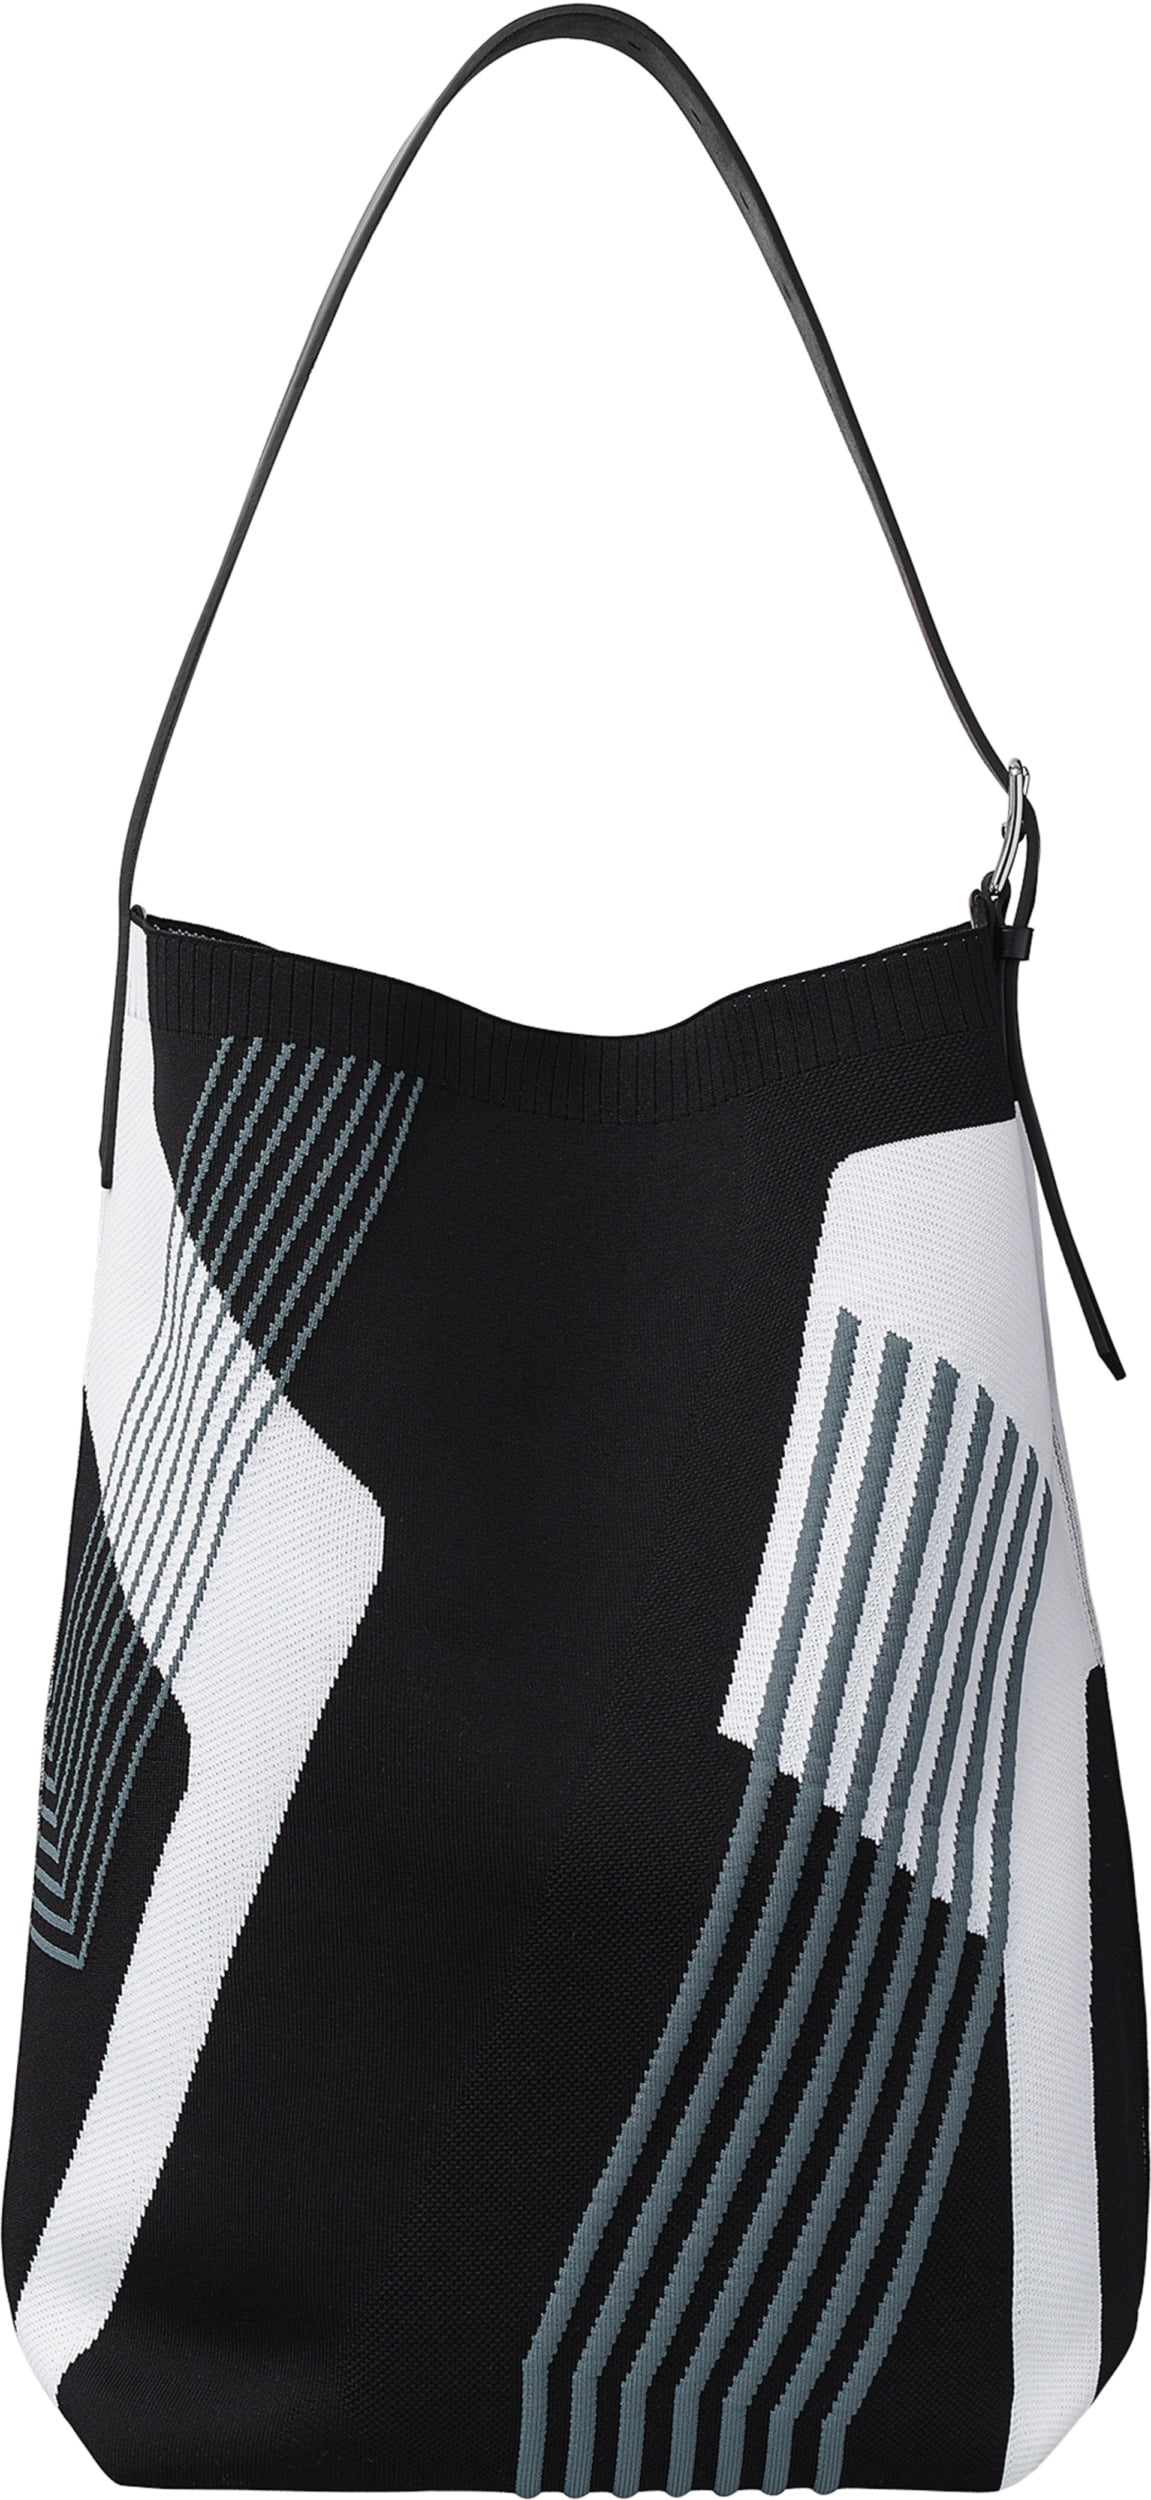 Etriviere shoulder MM dynamo bag by Hermès.